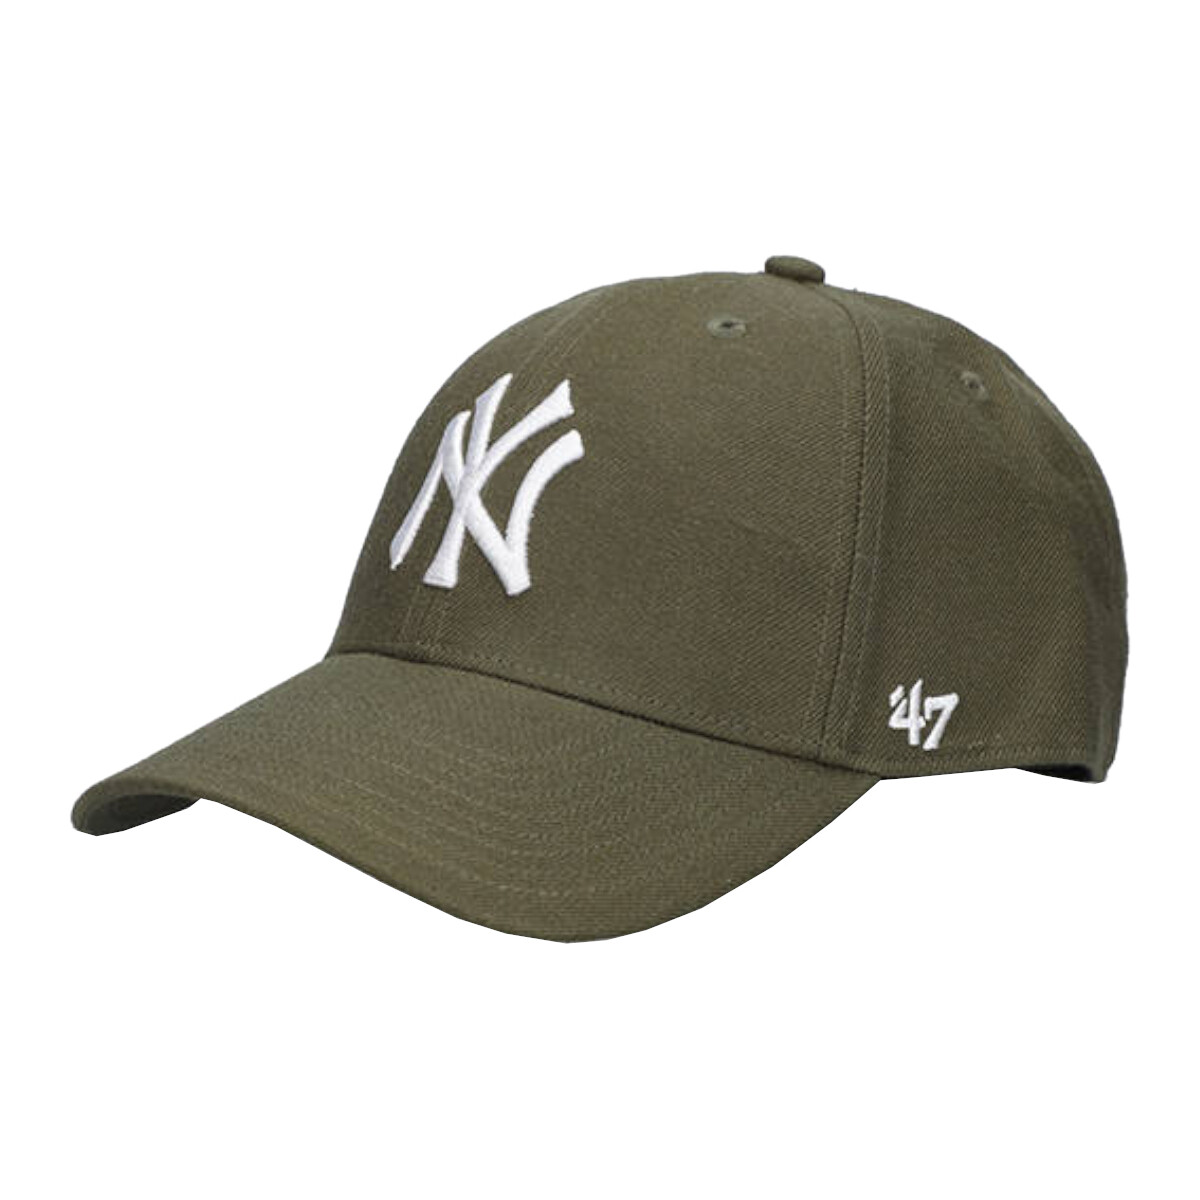 Accesorii textile Sepci '47 Brand New York Yankees MVP Cap verde